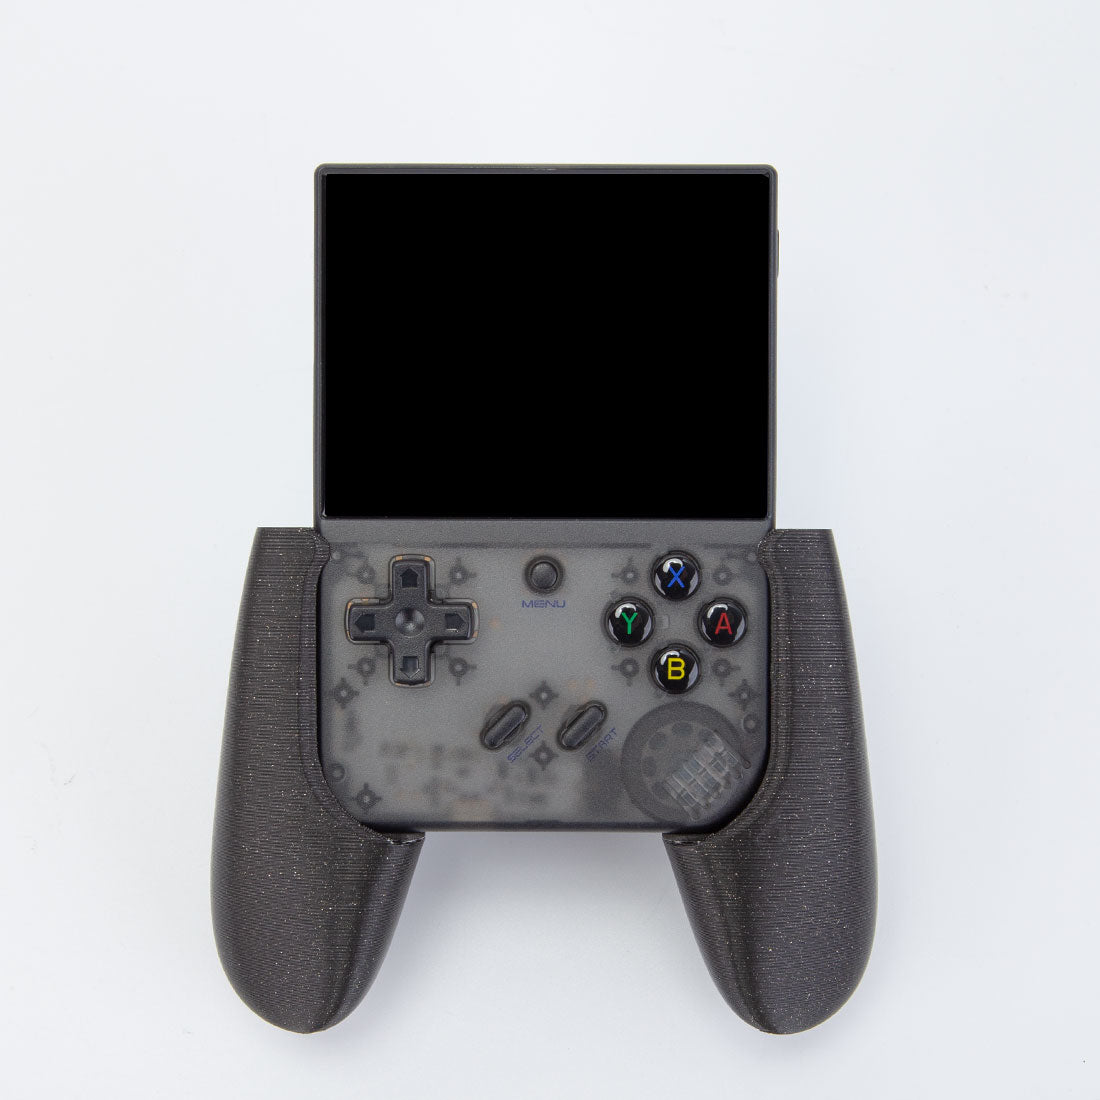 Anbernic RG35XX Plus Game Console Controller Handle - Mechdiy